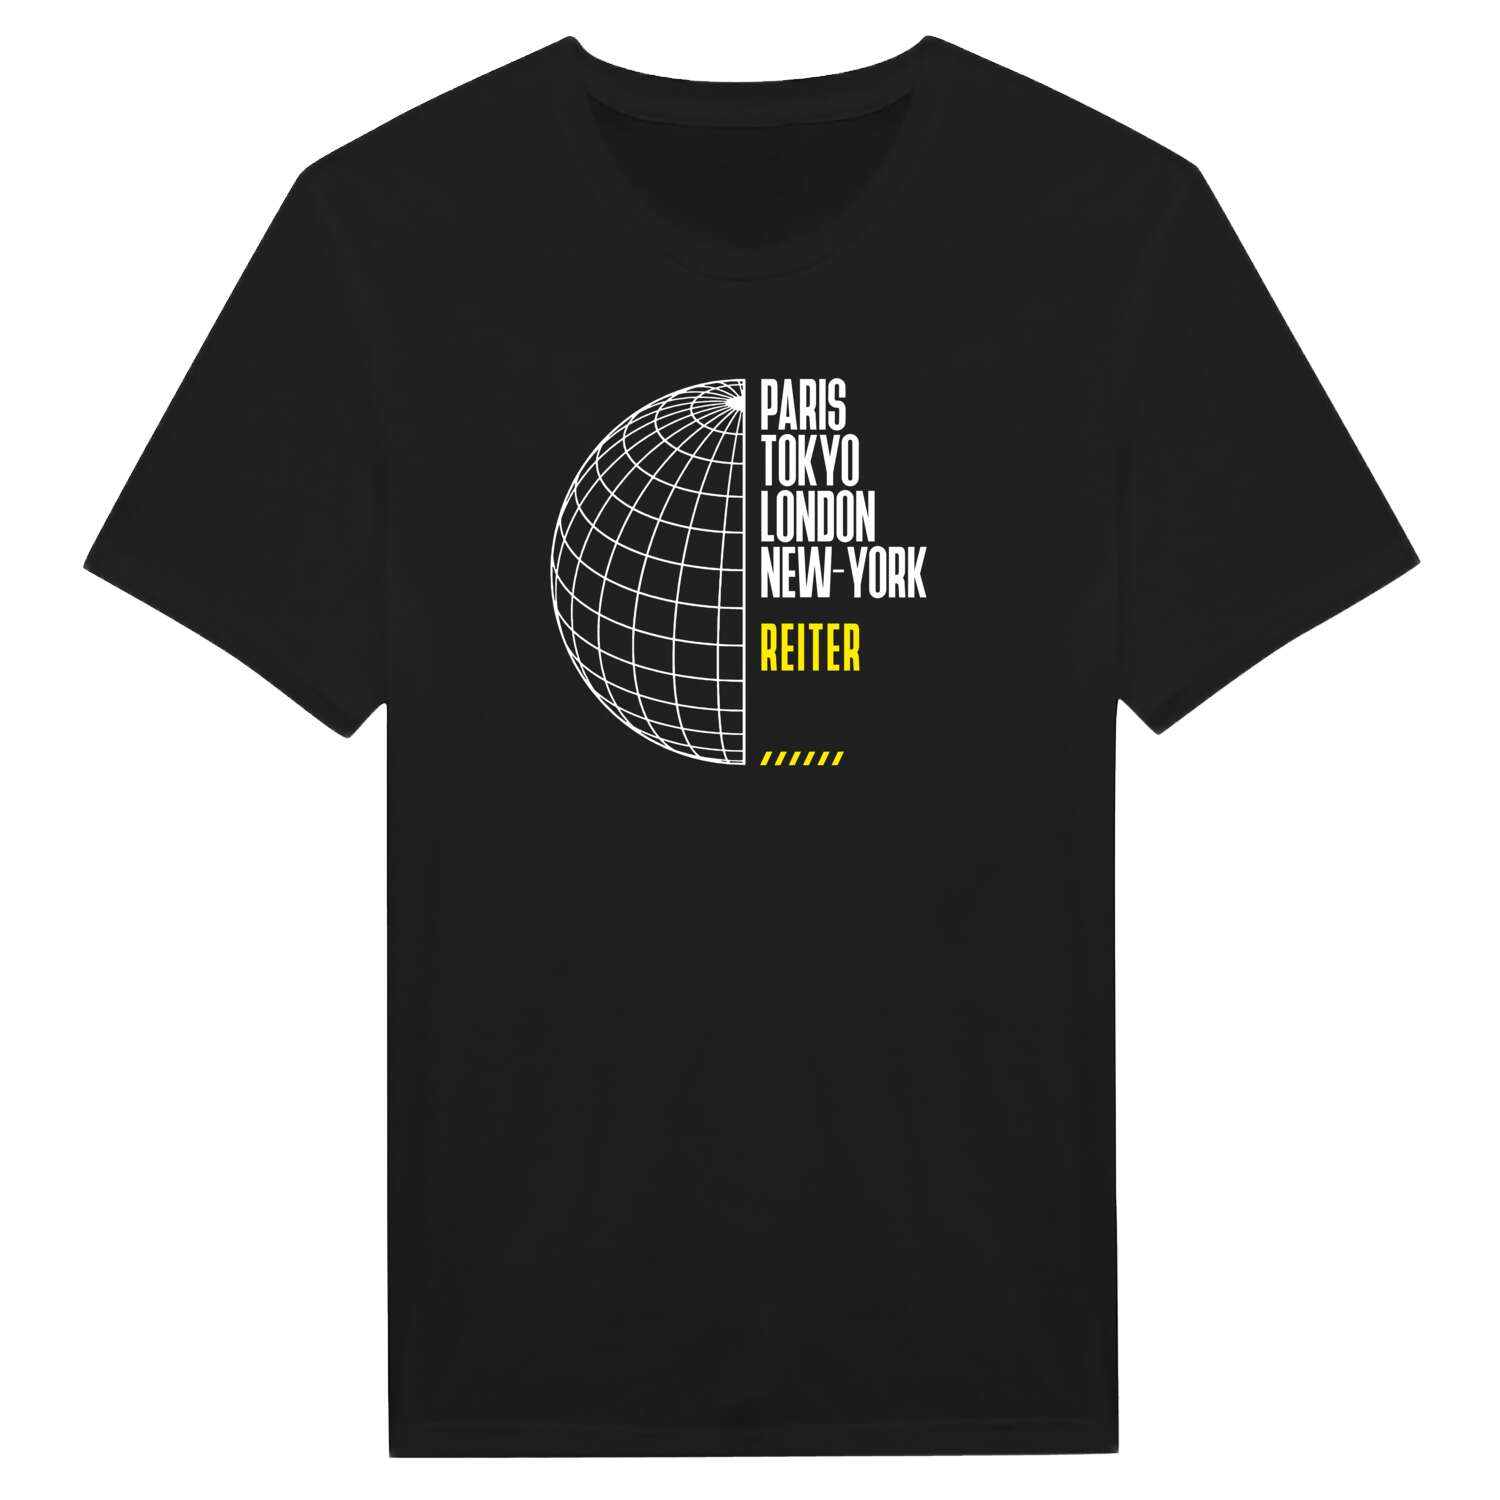 Reiter T-Shirt »Paris Tokyo London«